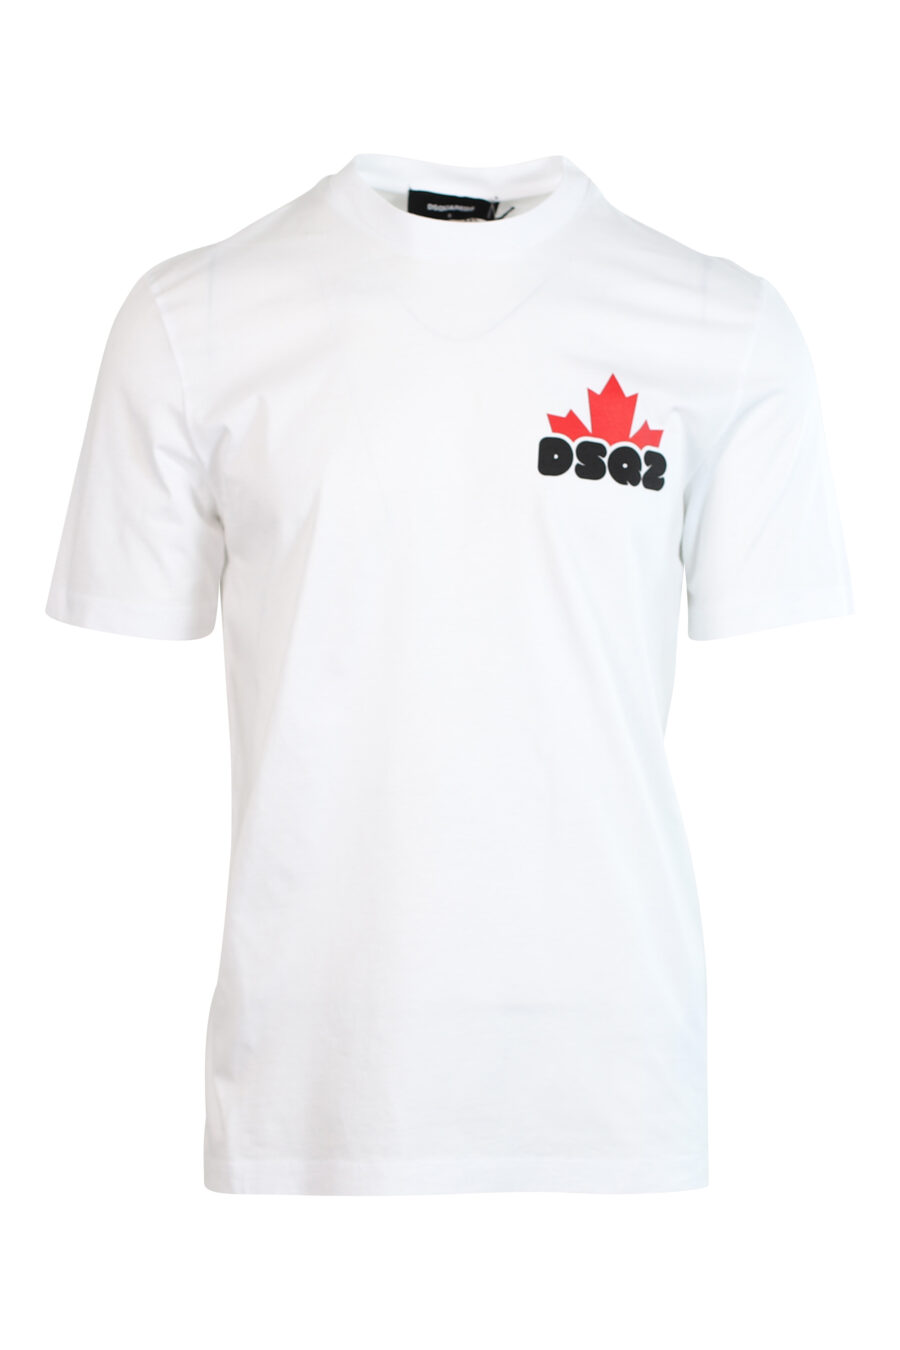 Camiseta blanca con minilogo negro "bold" y hoja naranja - 8052134990148